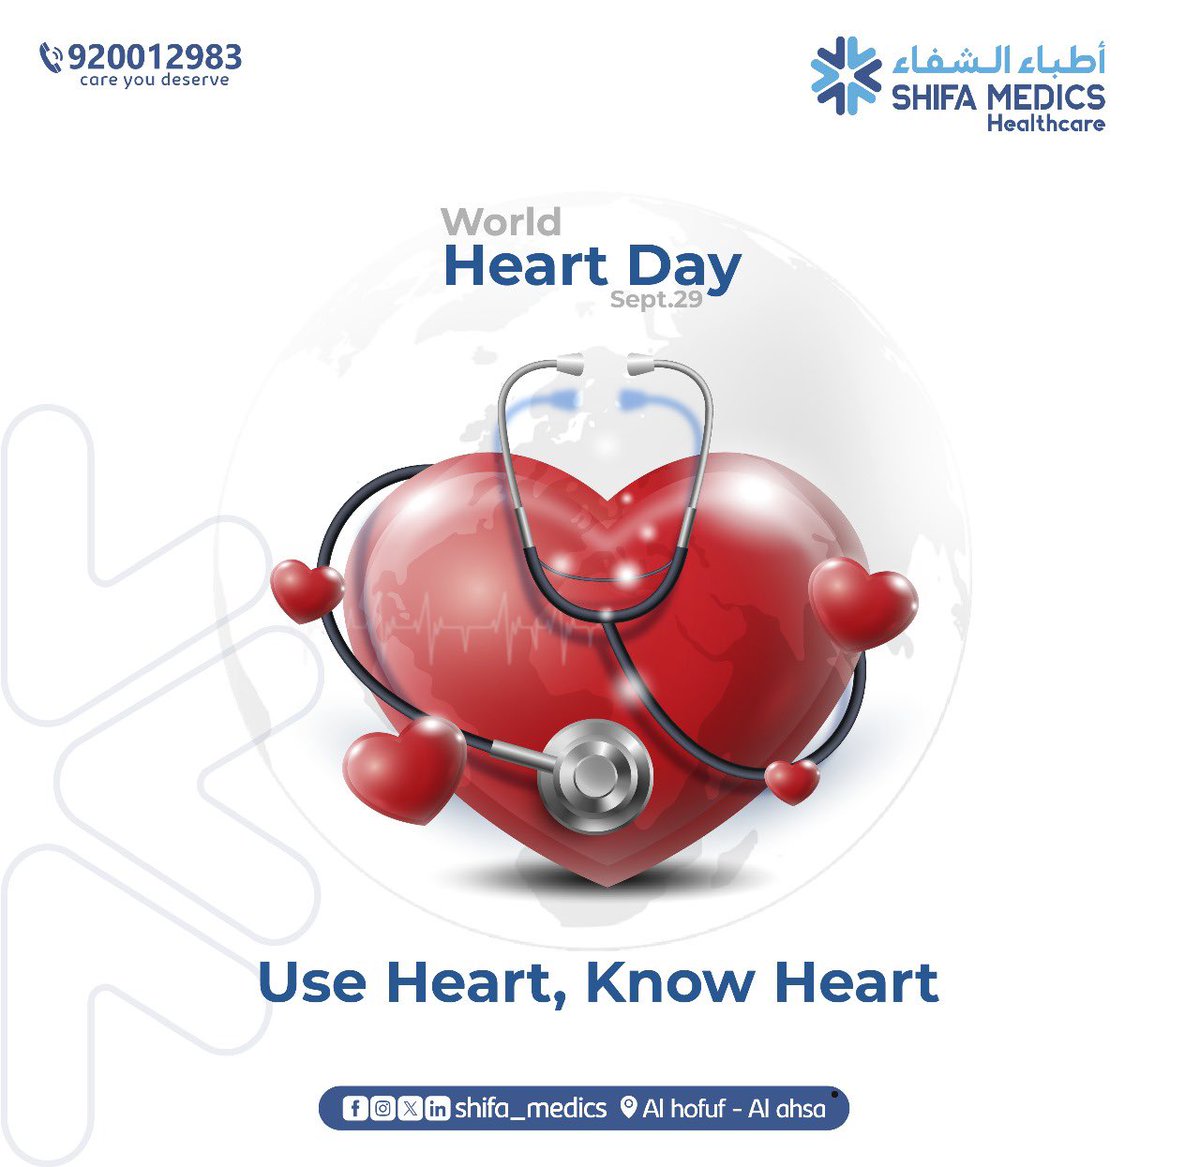 World Heart Day
Sept29

#worldheartday 
#heart  
#shifa_medics
#healthcare
#alhofuf #alomairi #alahsa #saudiarabia
#medical #clinic #healthcare #medical_services
#iqama
#medicalfitness
#general_practitioner #dentist
#physiotherapyday